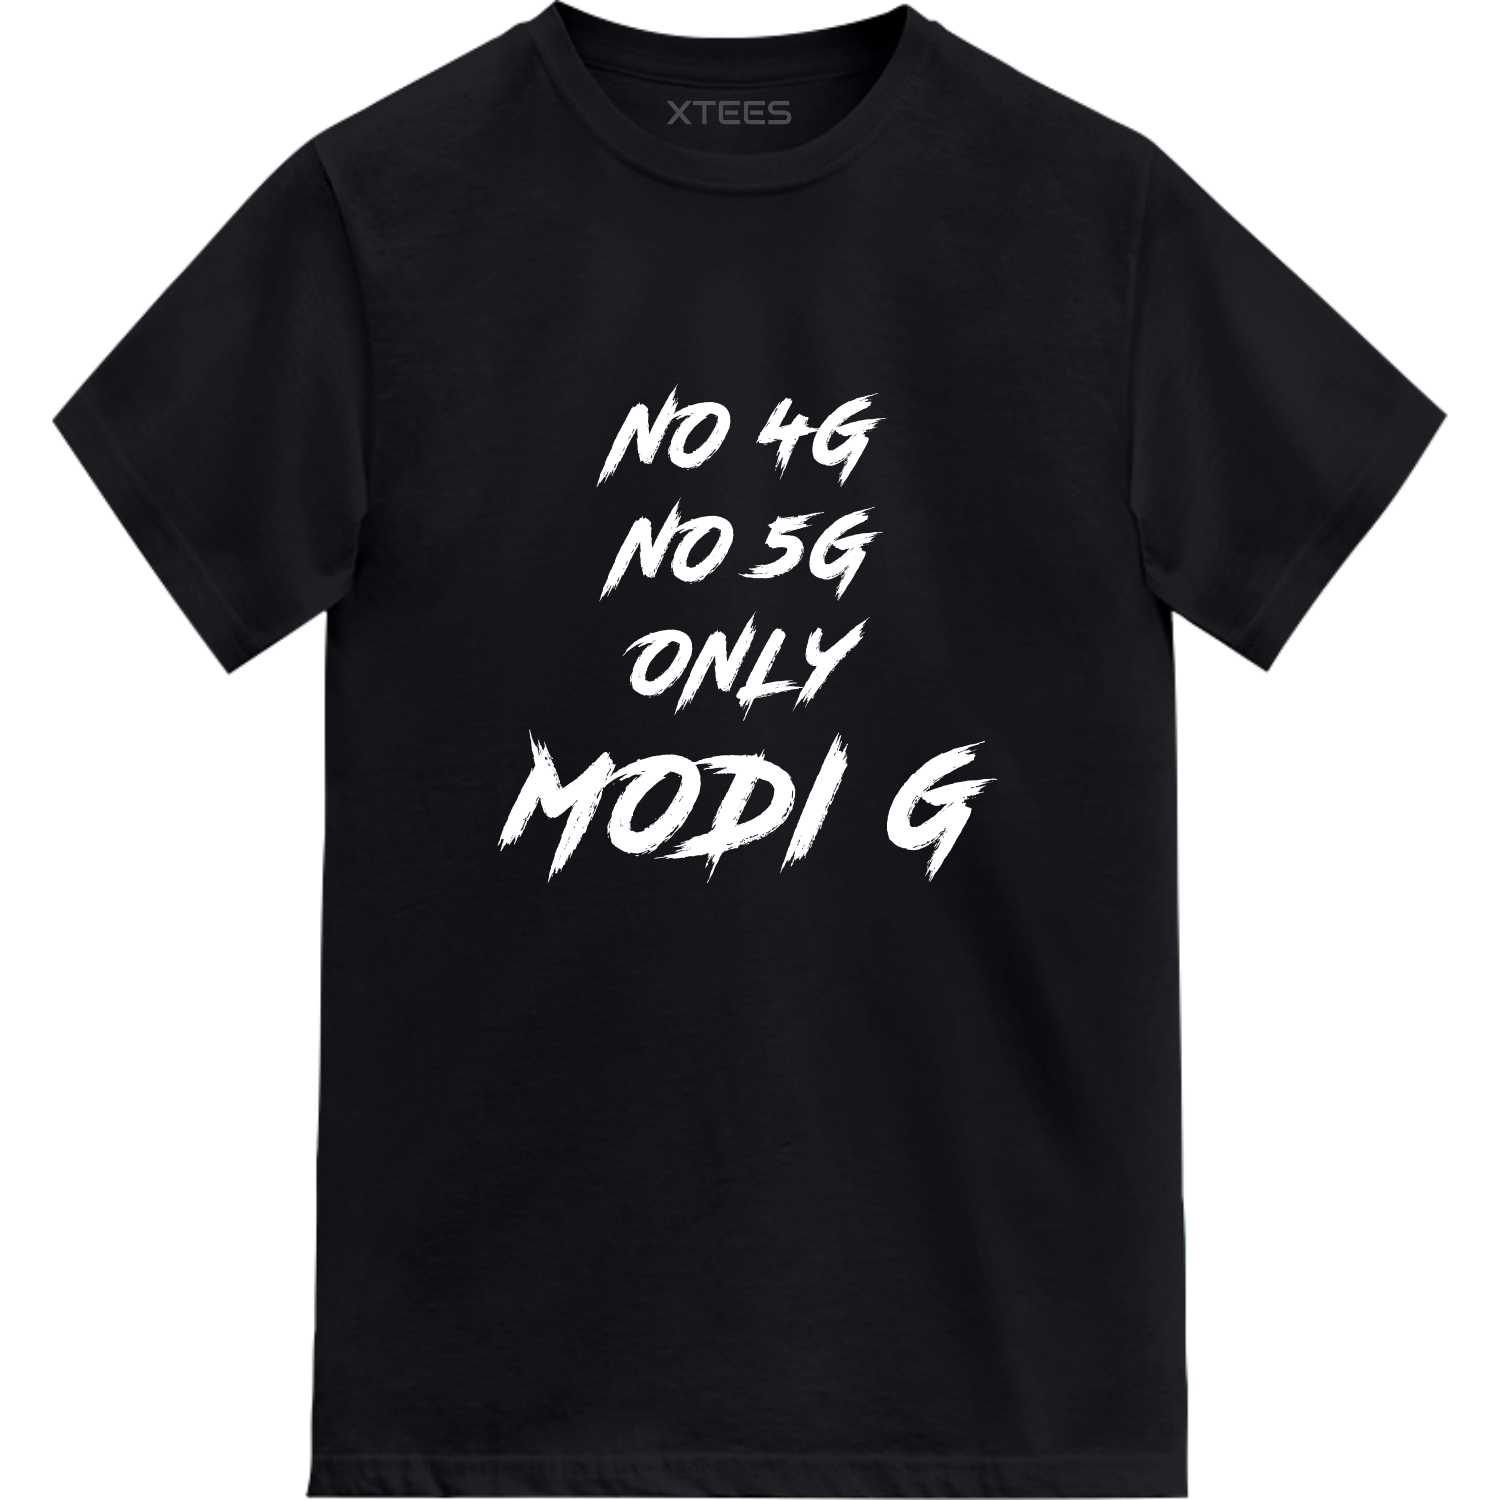 No 4g No 5g Only Modi G Slogan T-shirts image